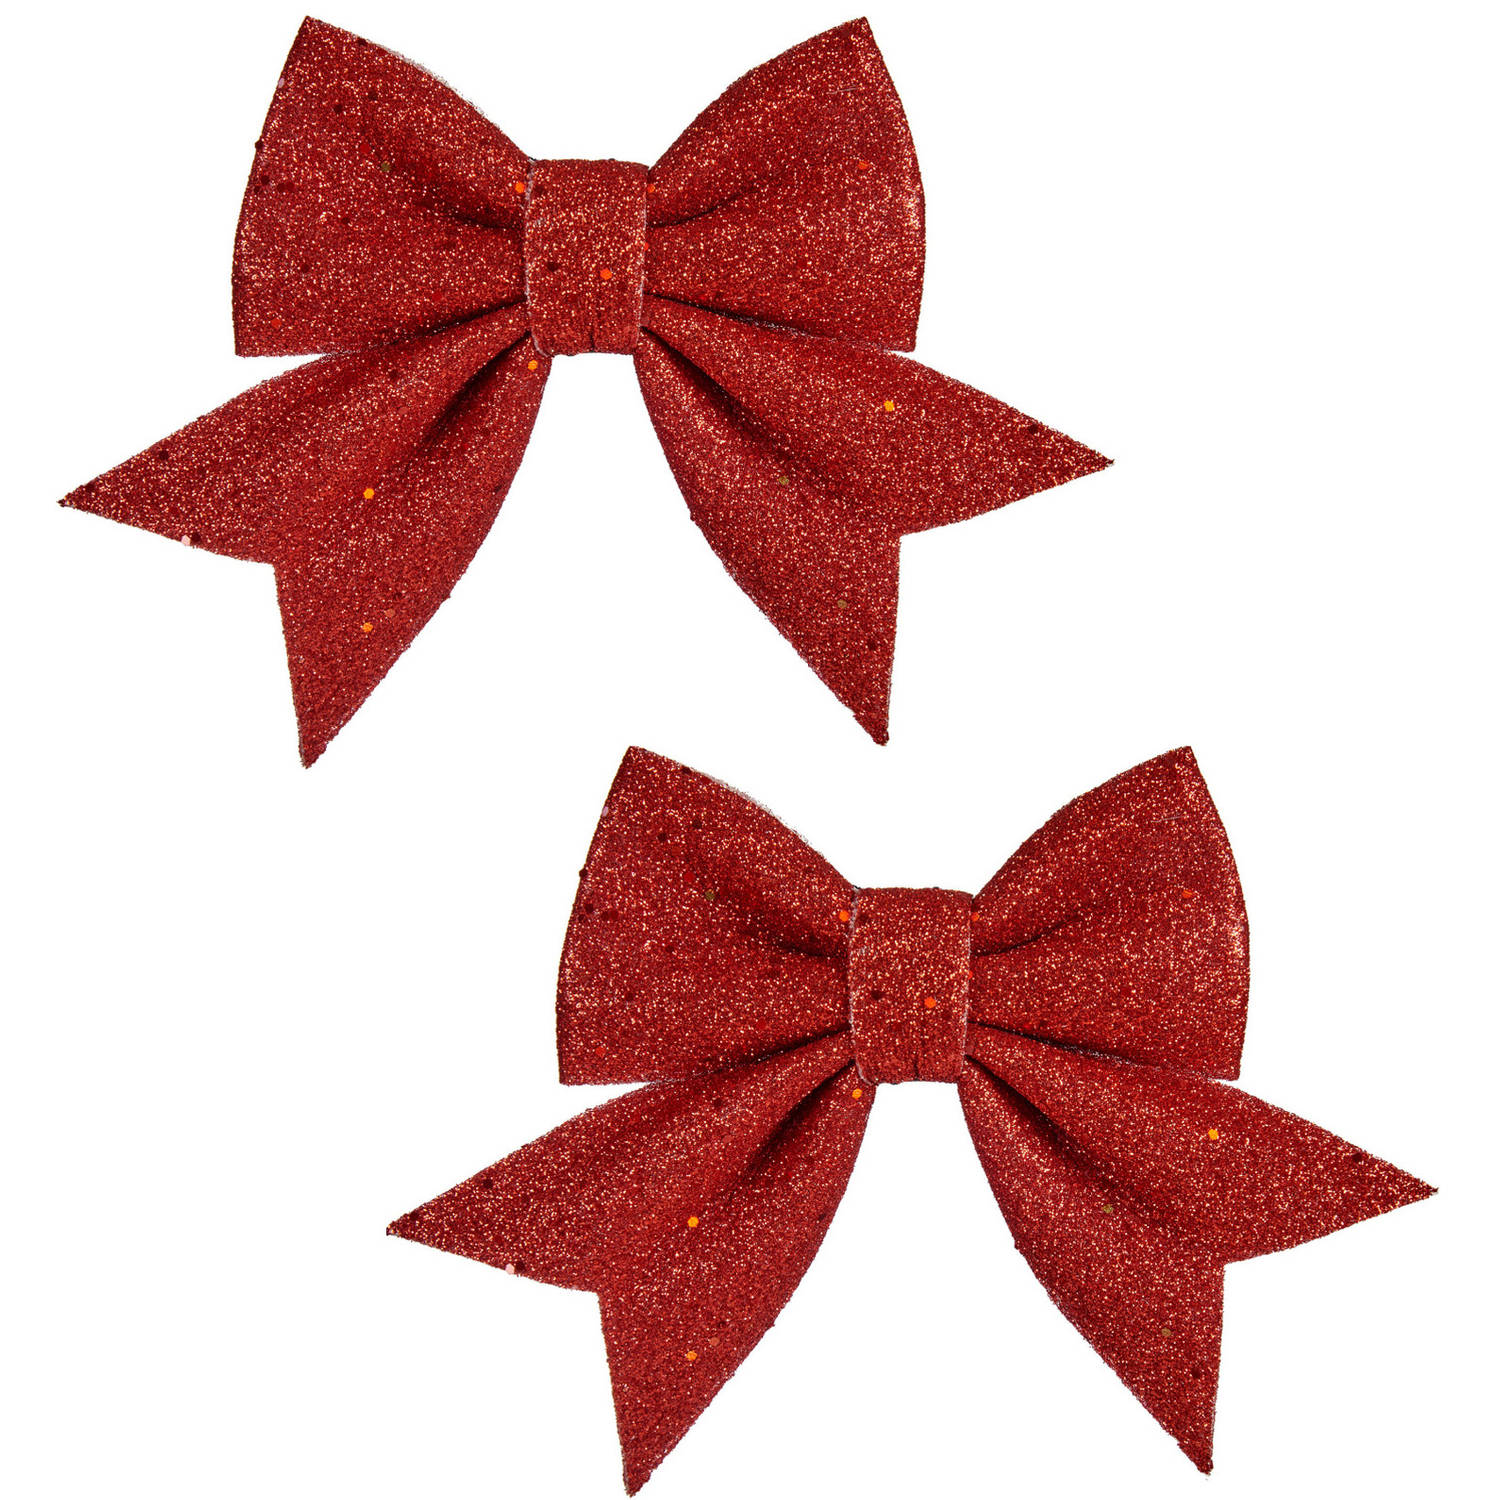 2x Stuks Kerstboomversiering Kleine Ornament Strikjes/strikken Rode Glitters 14 X 12 Cm - Kersthangers